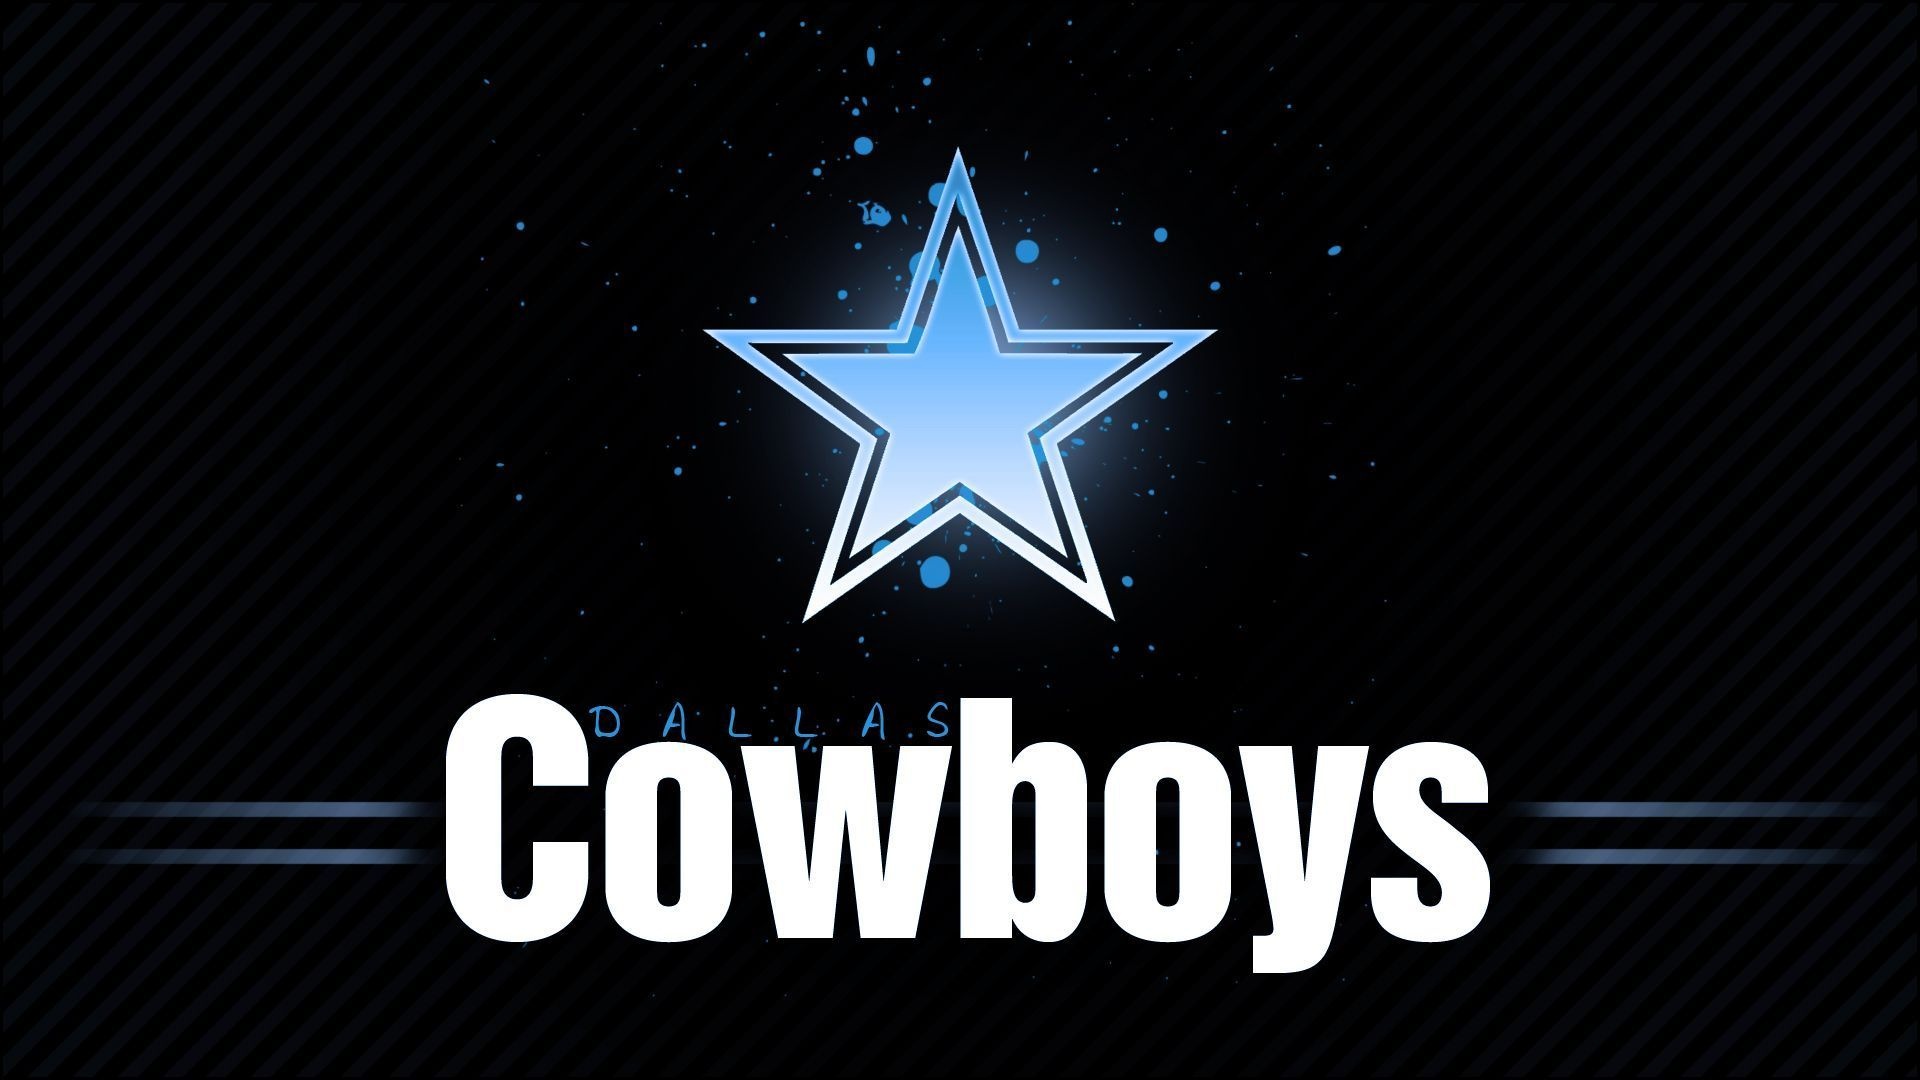 Dallas Cowboys cool wallpaper